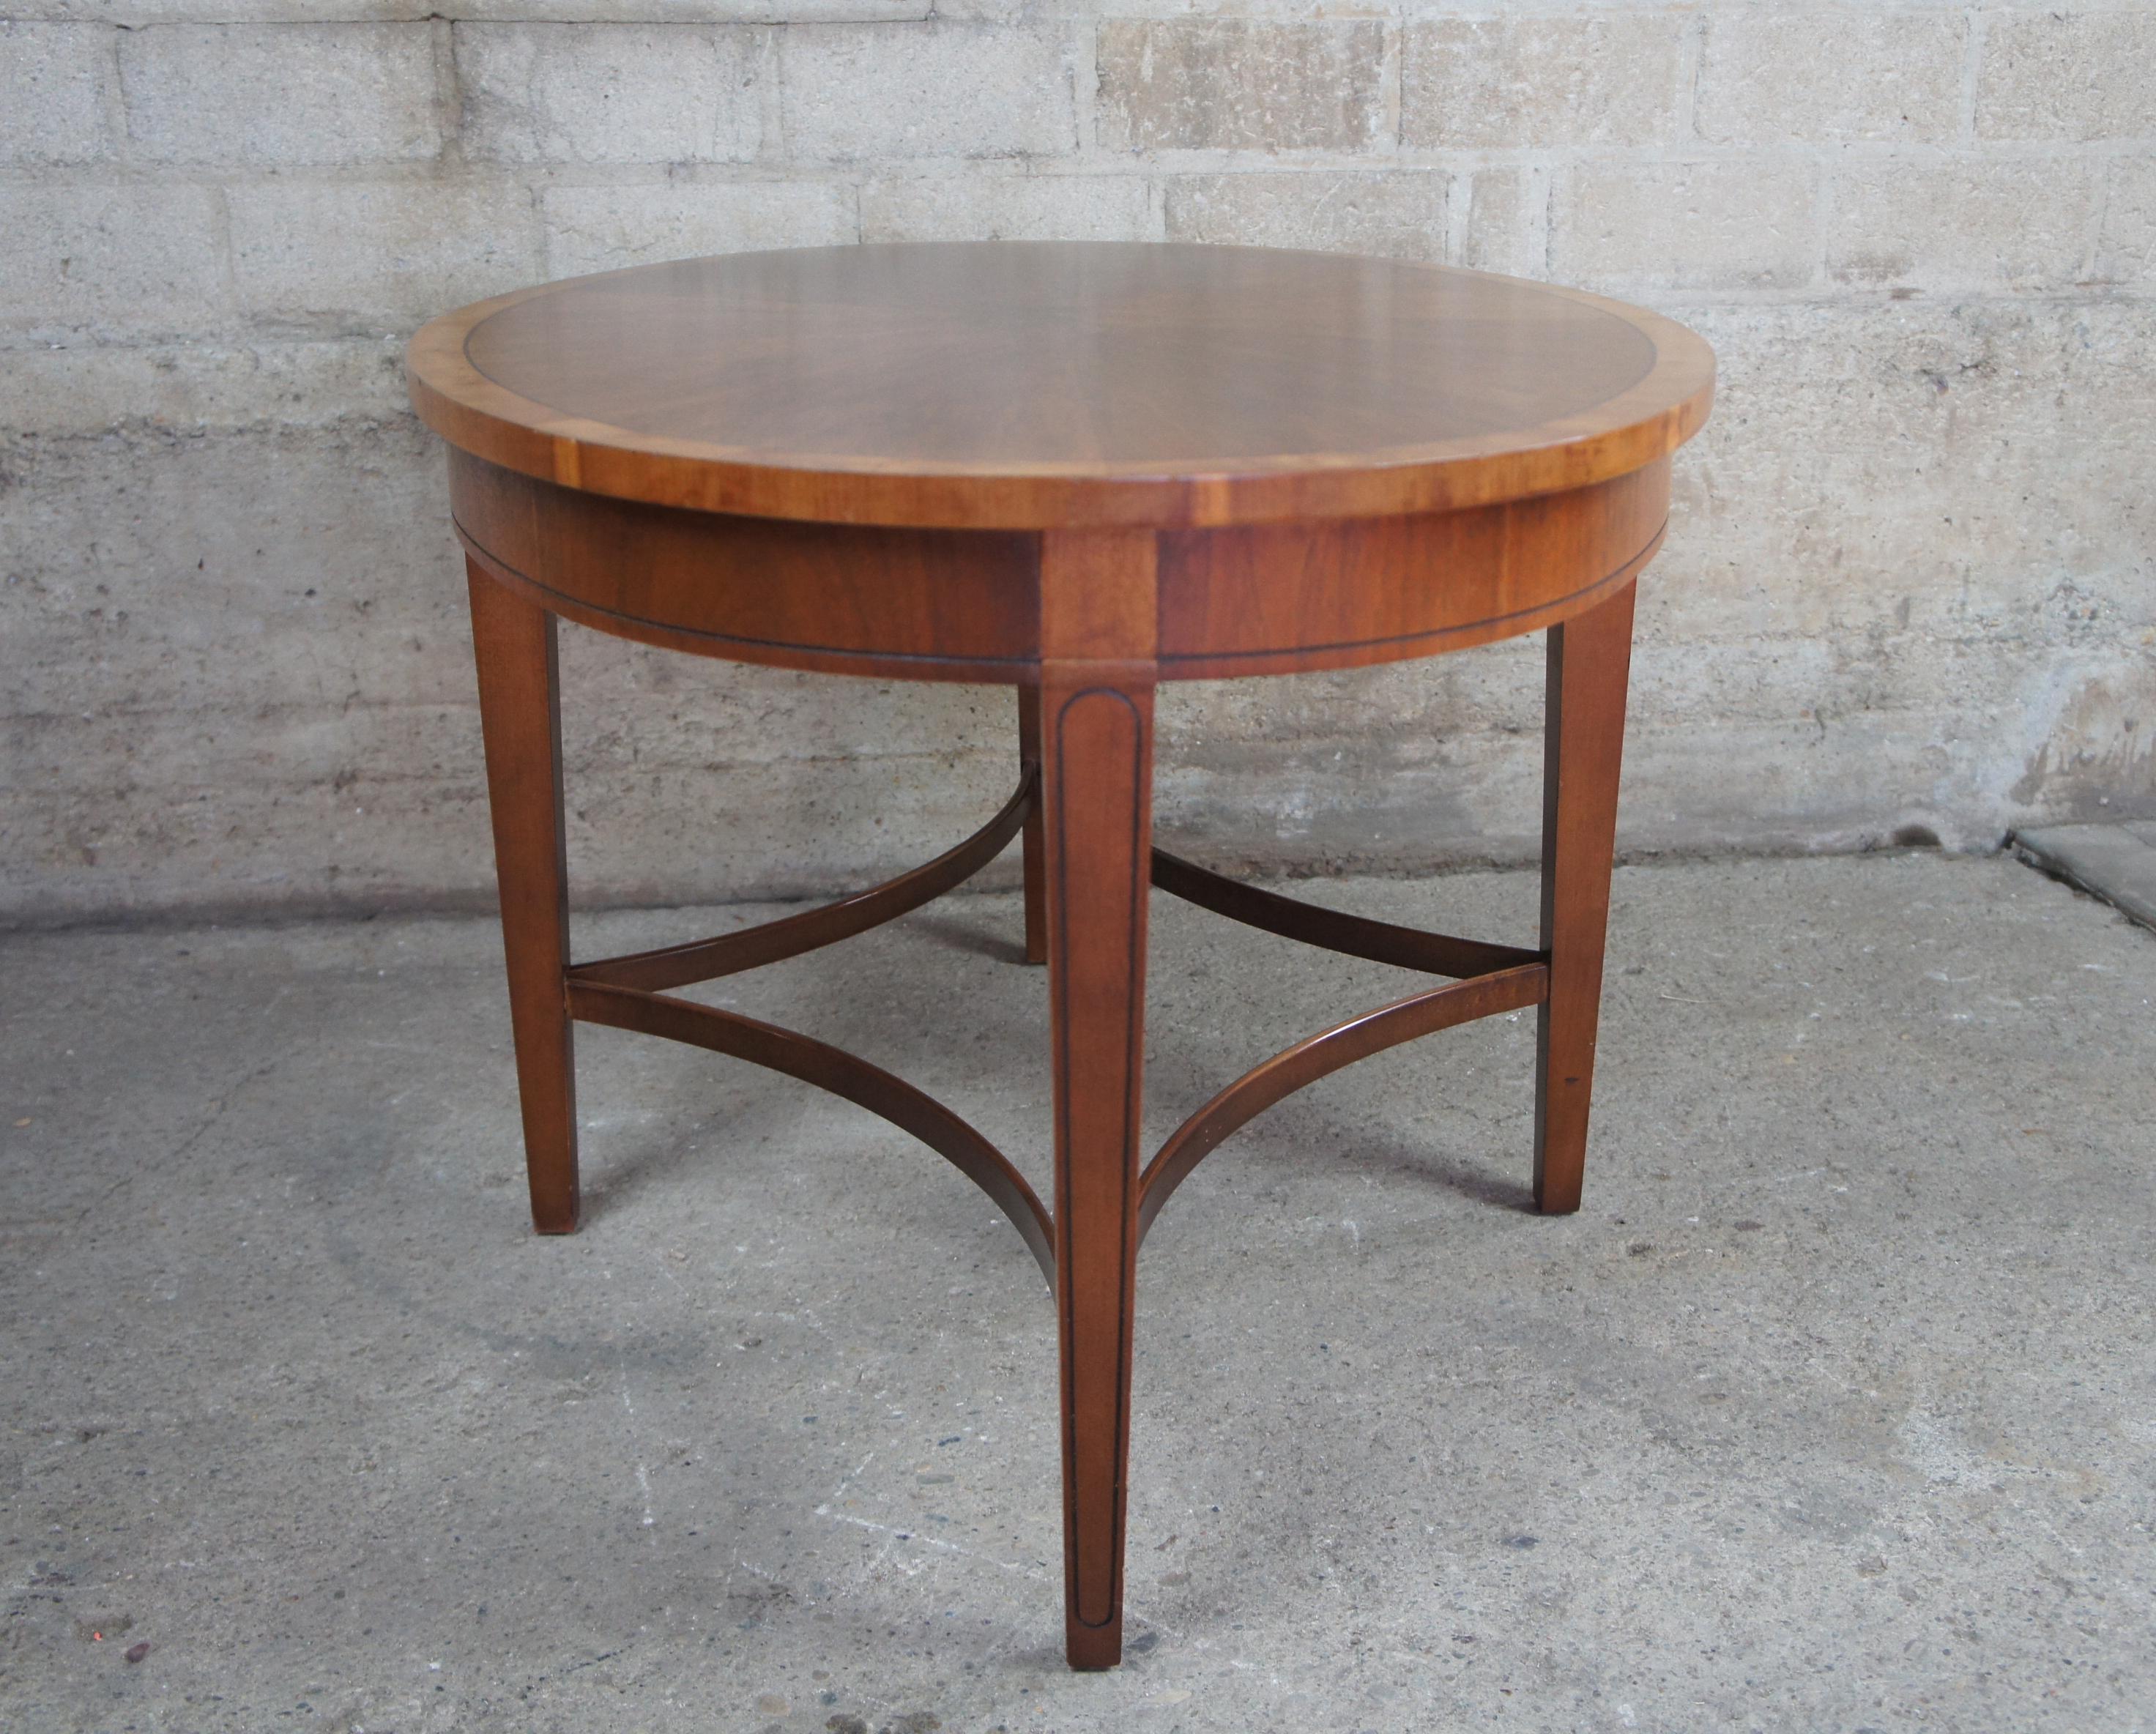 Baker Furniture Laura Ashley Inlaid Mahogany Burl Wood Coffee Table Sheraton 1